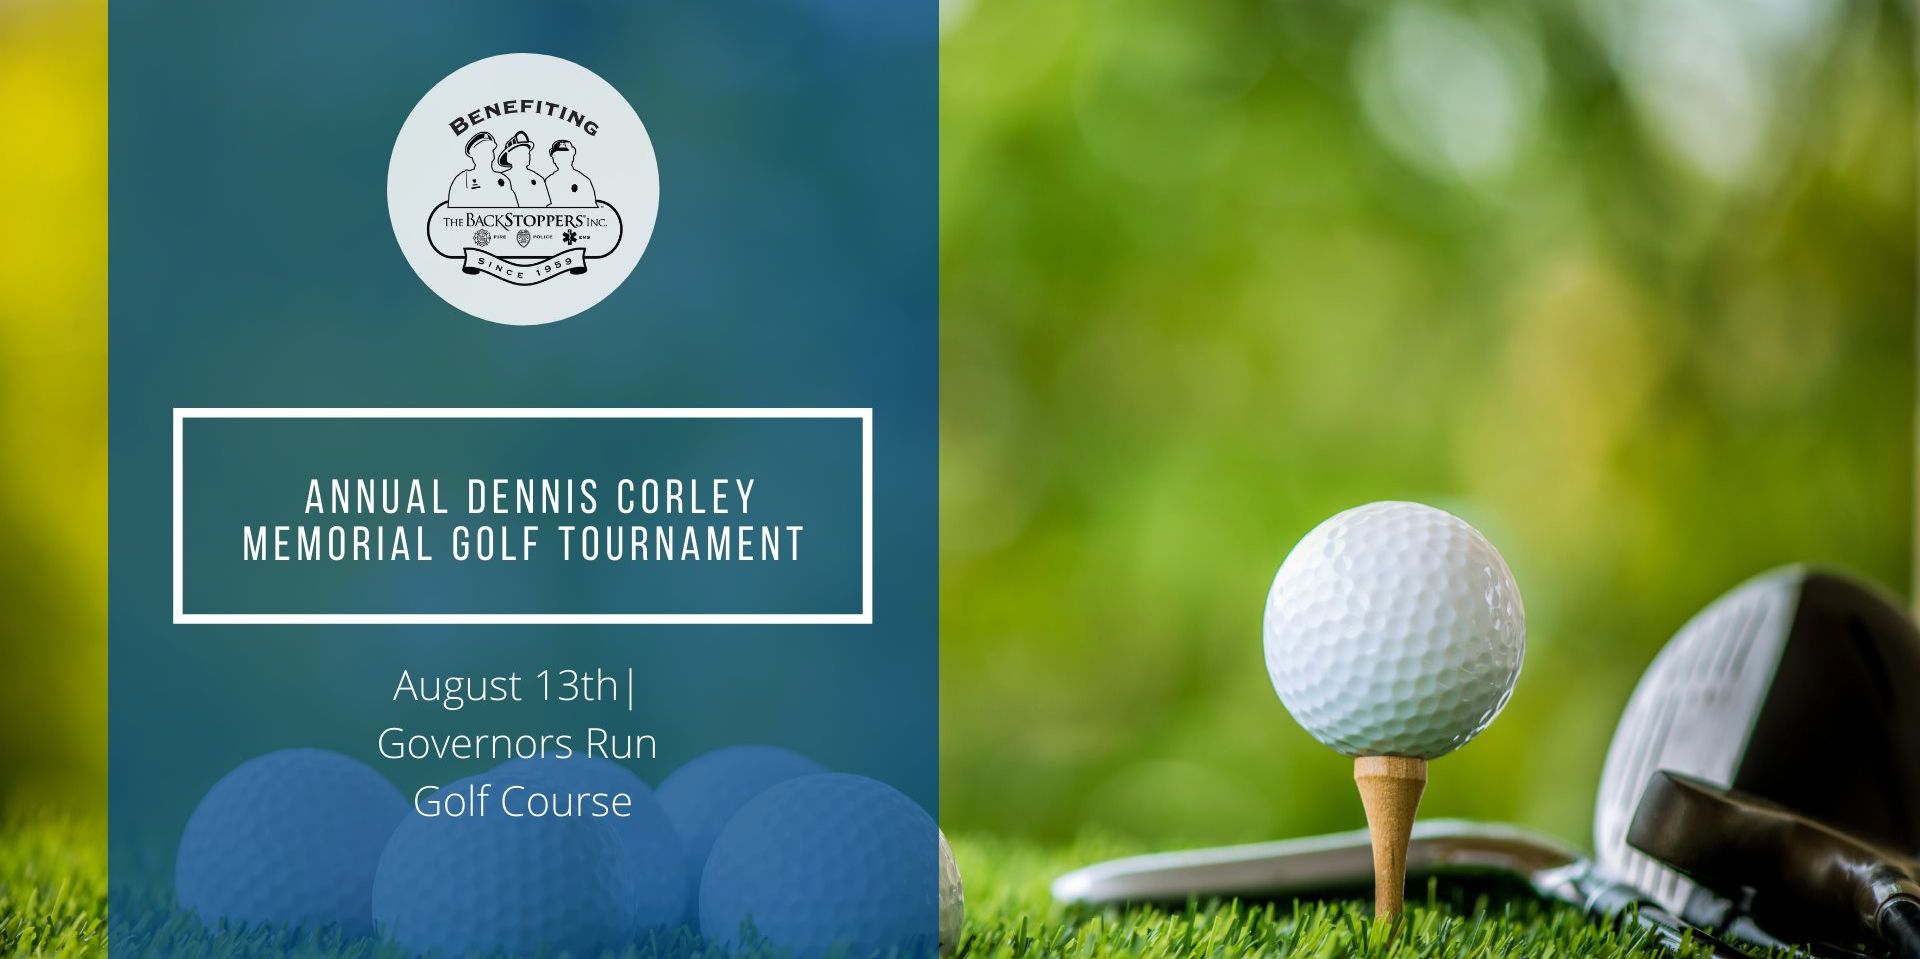 Dennis Corley Memorial Golf Tournament promotional image